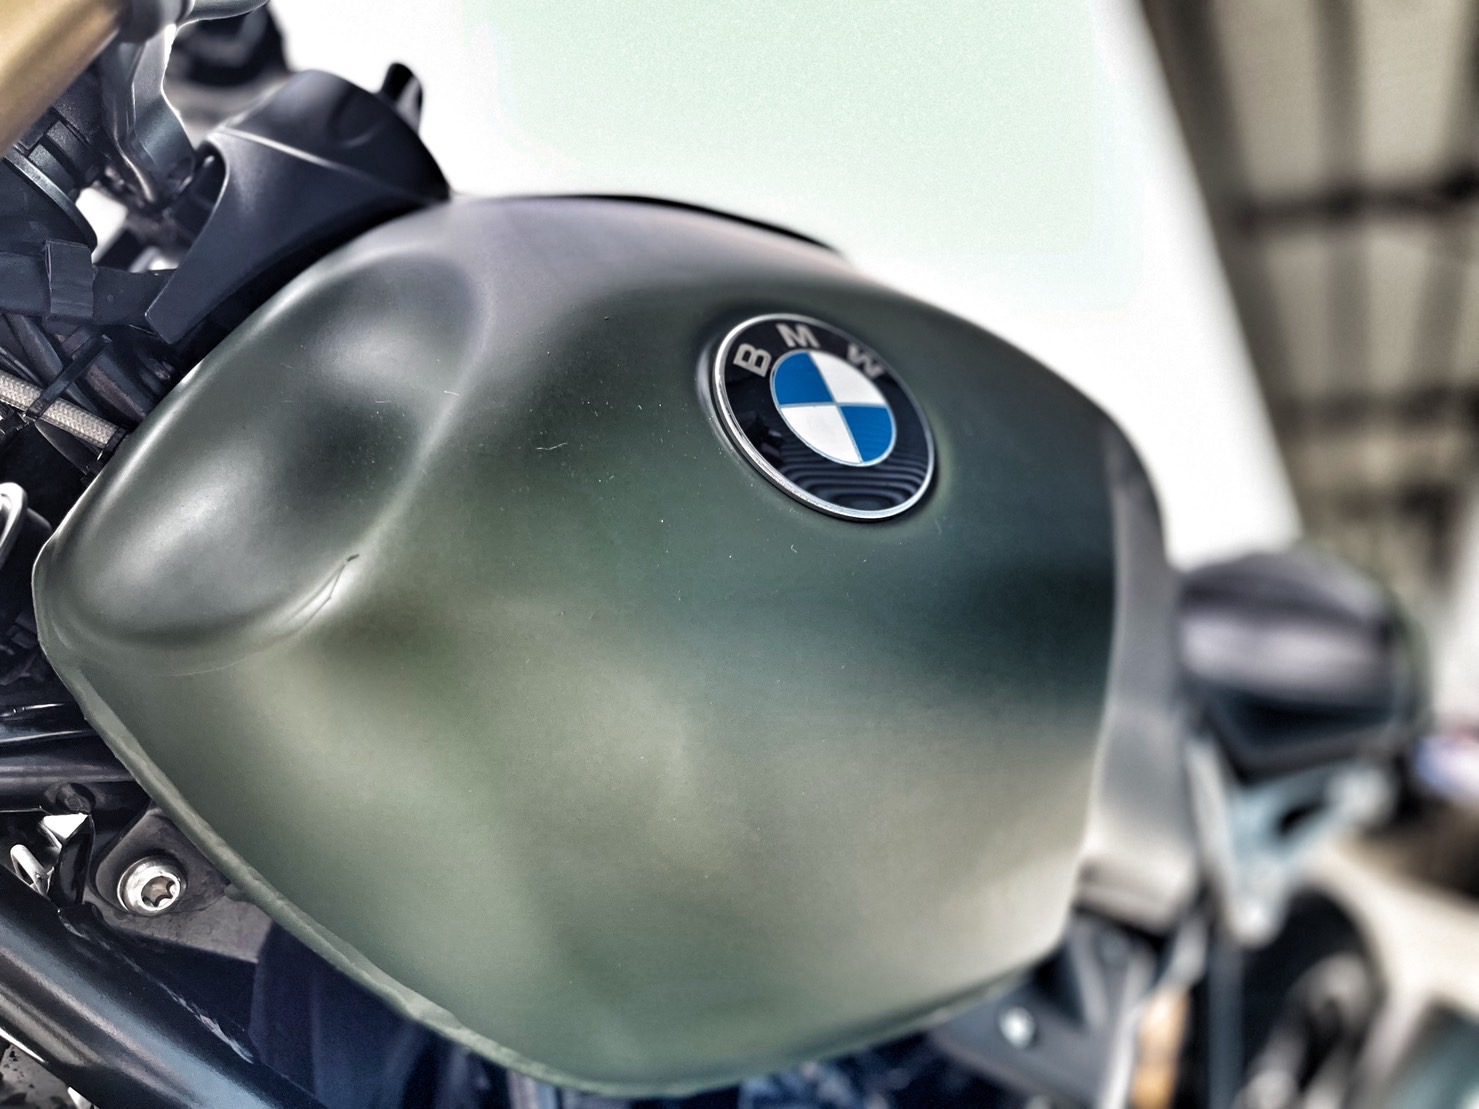 BMW R nineT - 中古/二手車出售中 視覺改裝 無摔無事故 小資族二手重機買賣 | 小資族二手重機買賣